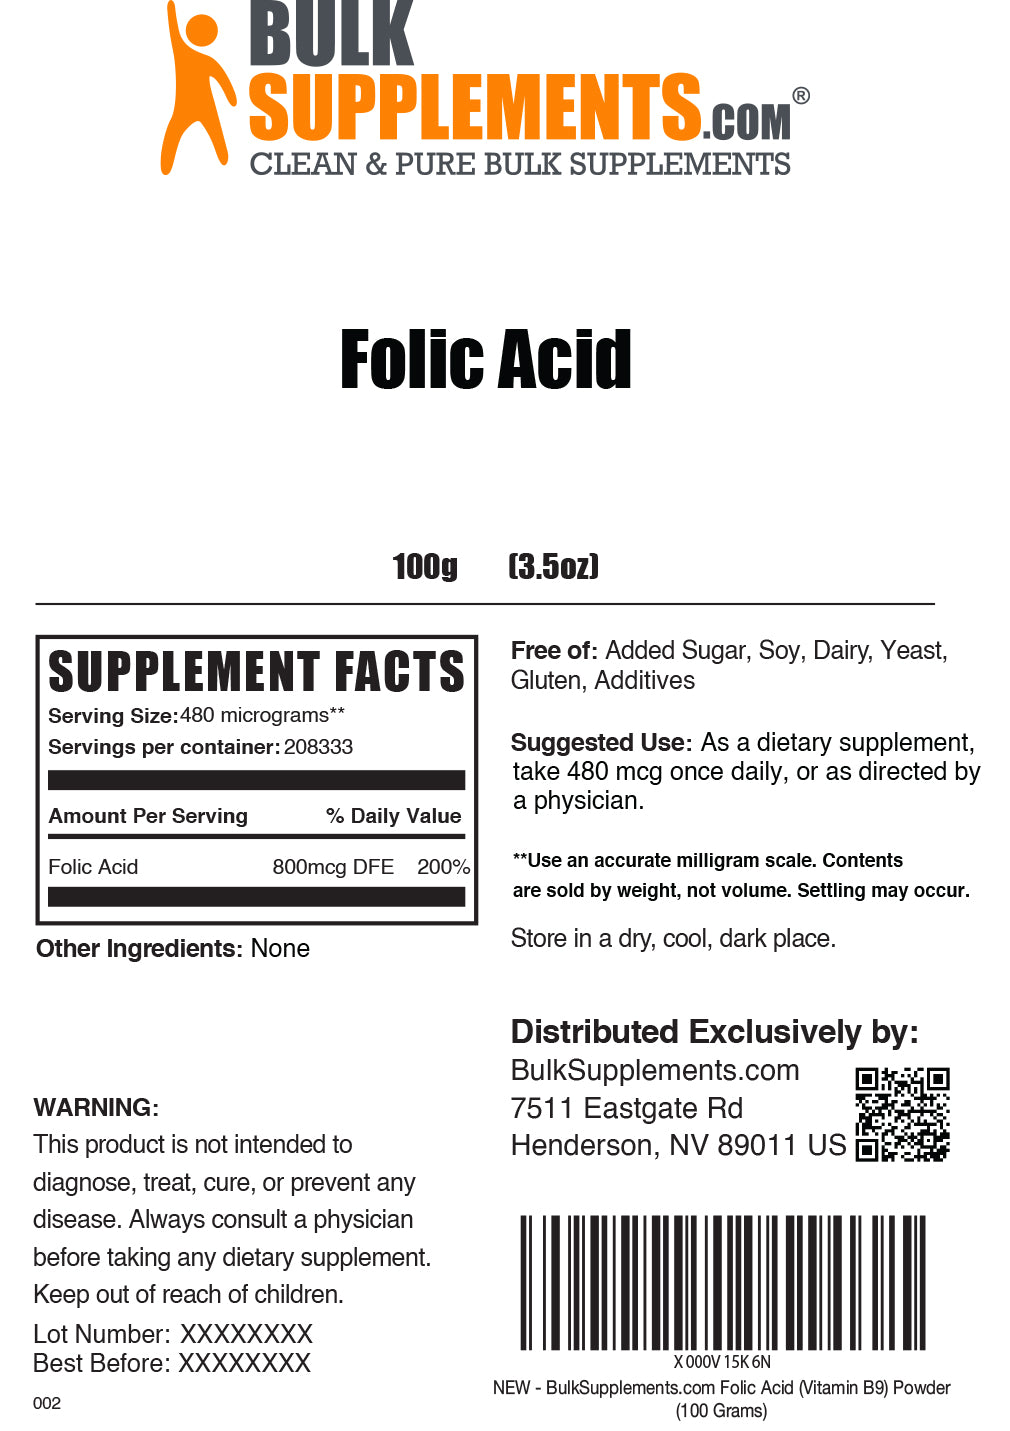 Folic Acid powder label 100g